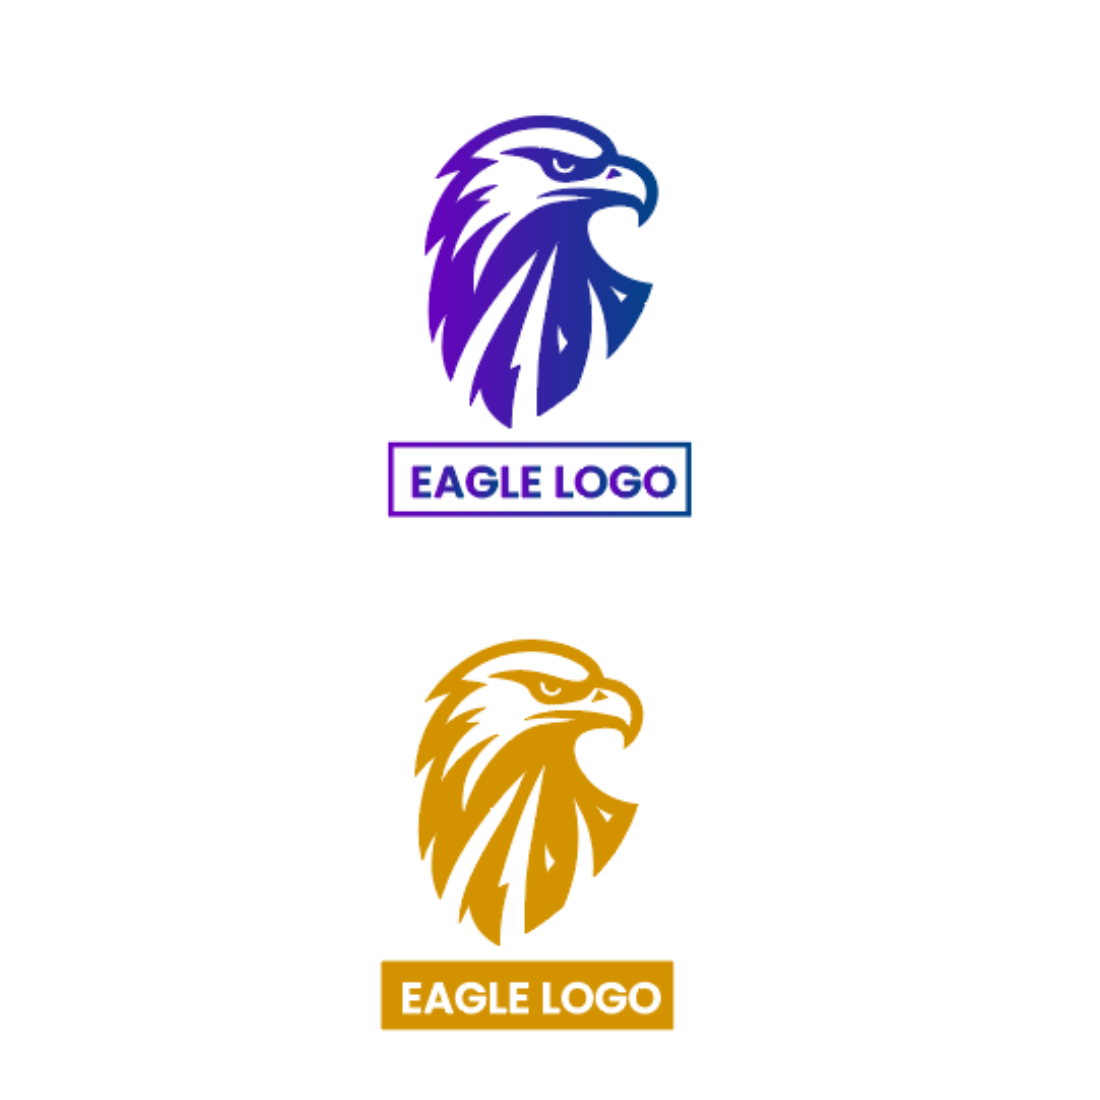 Eagle Logo preview image.